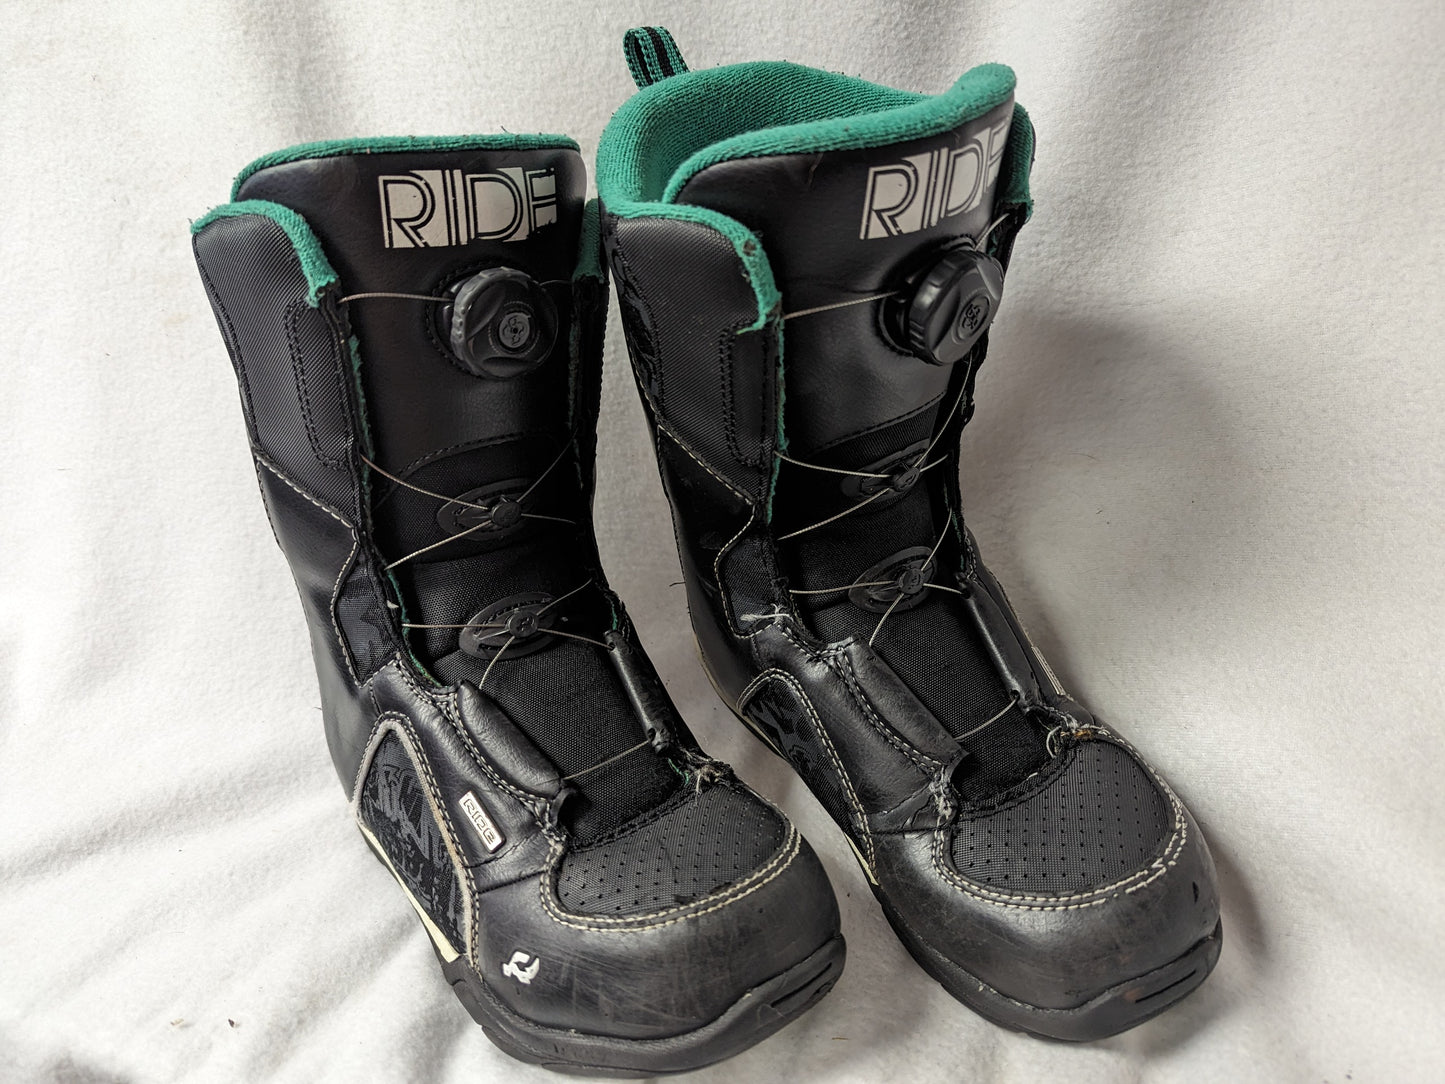 Ride Spark Boa Snowboard Boots Size 5 Color Black Condition Used